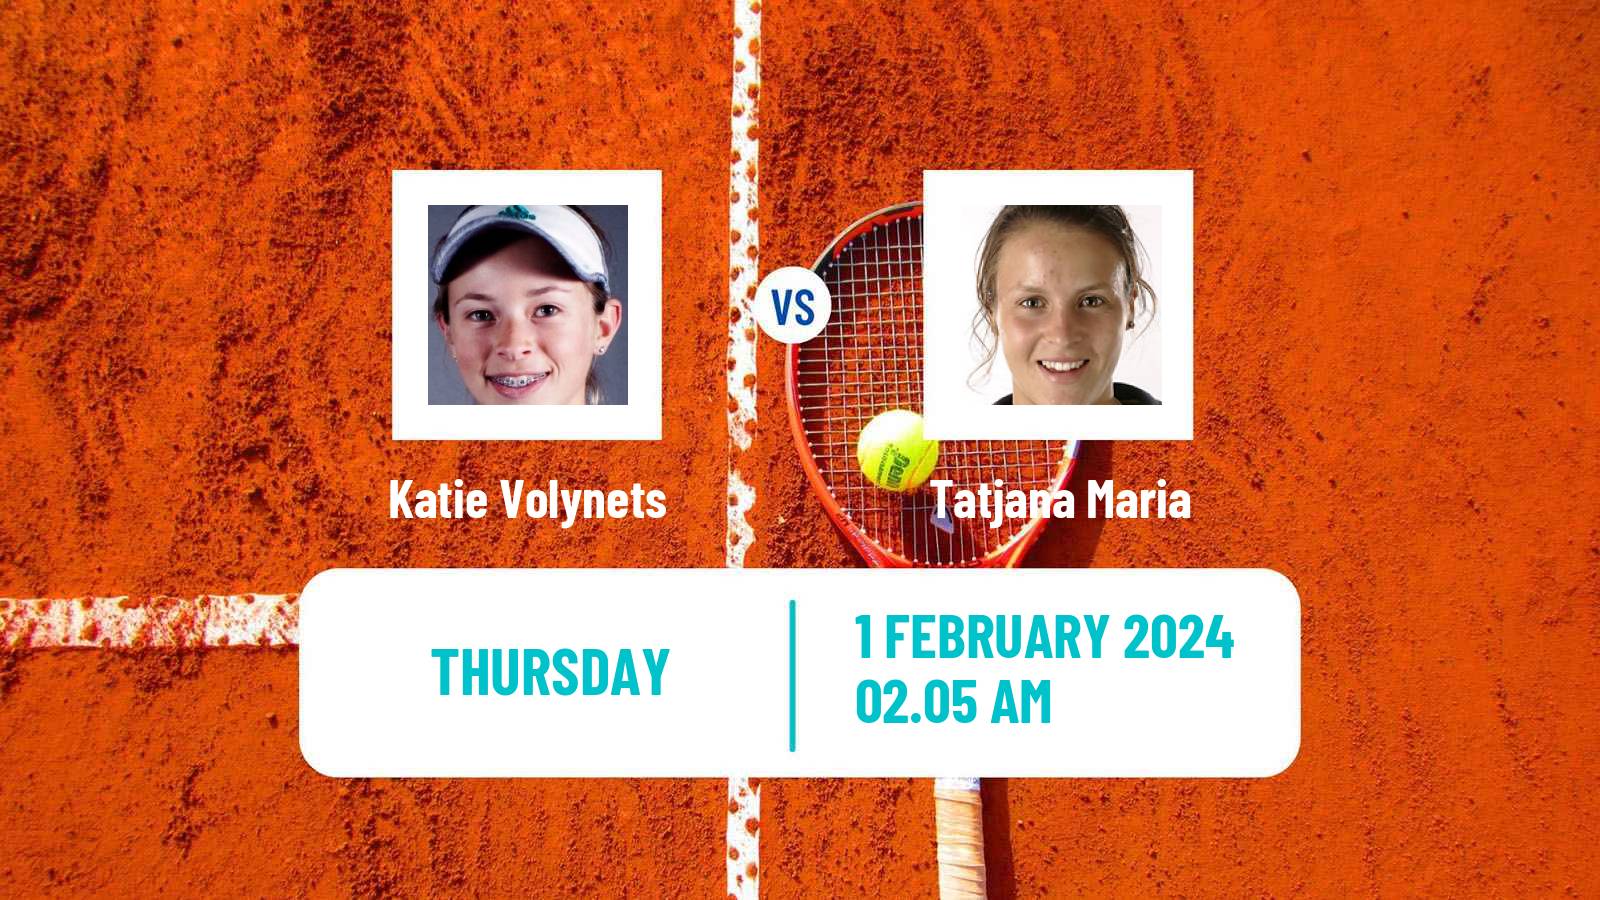 Tennis WTA Hua Hin Katie Volynets - Tatjana Maria